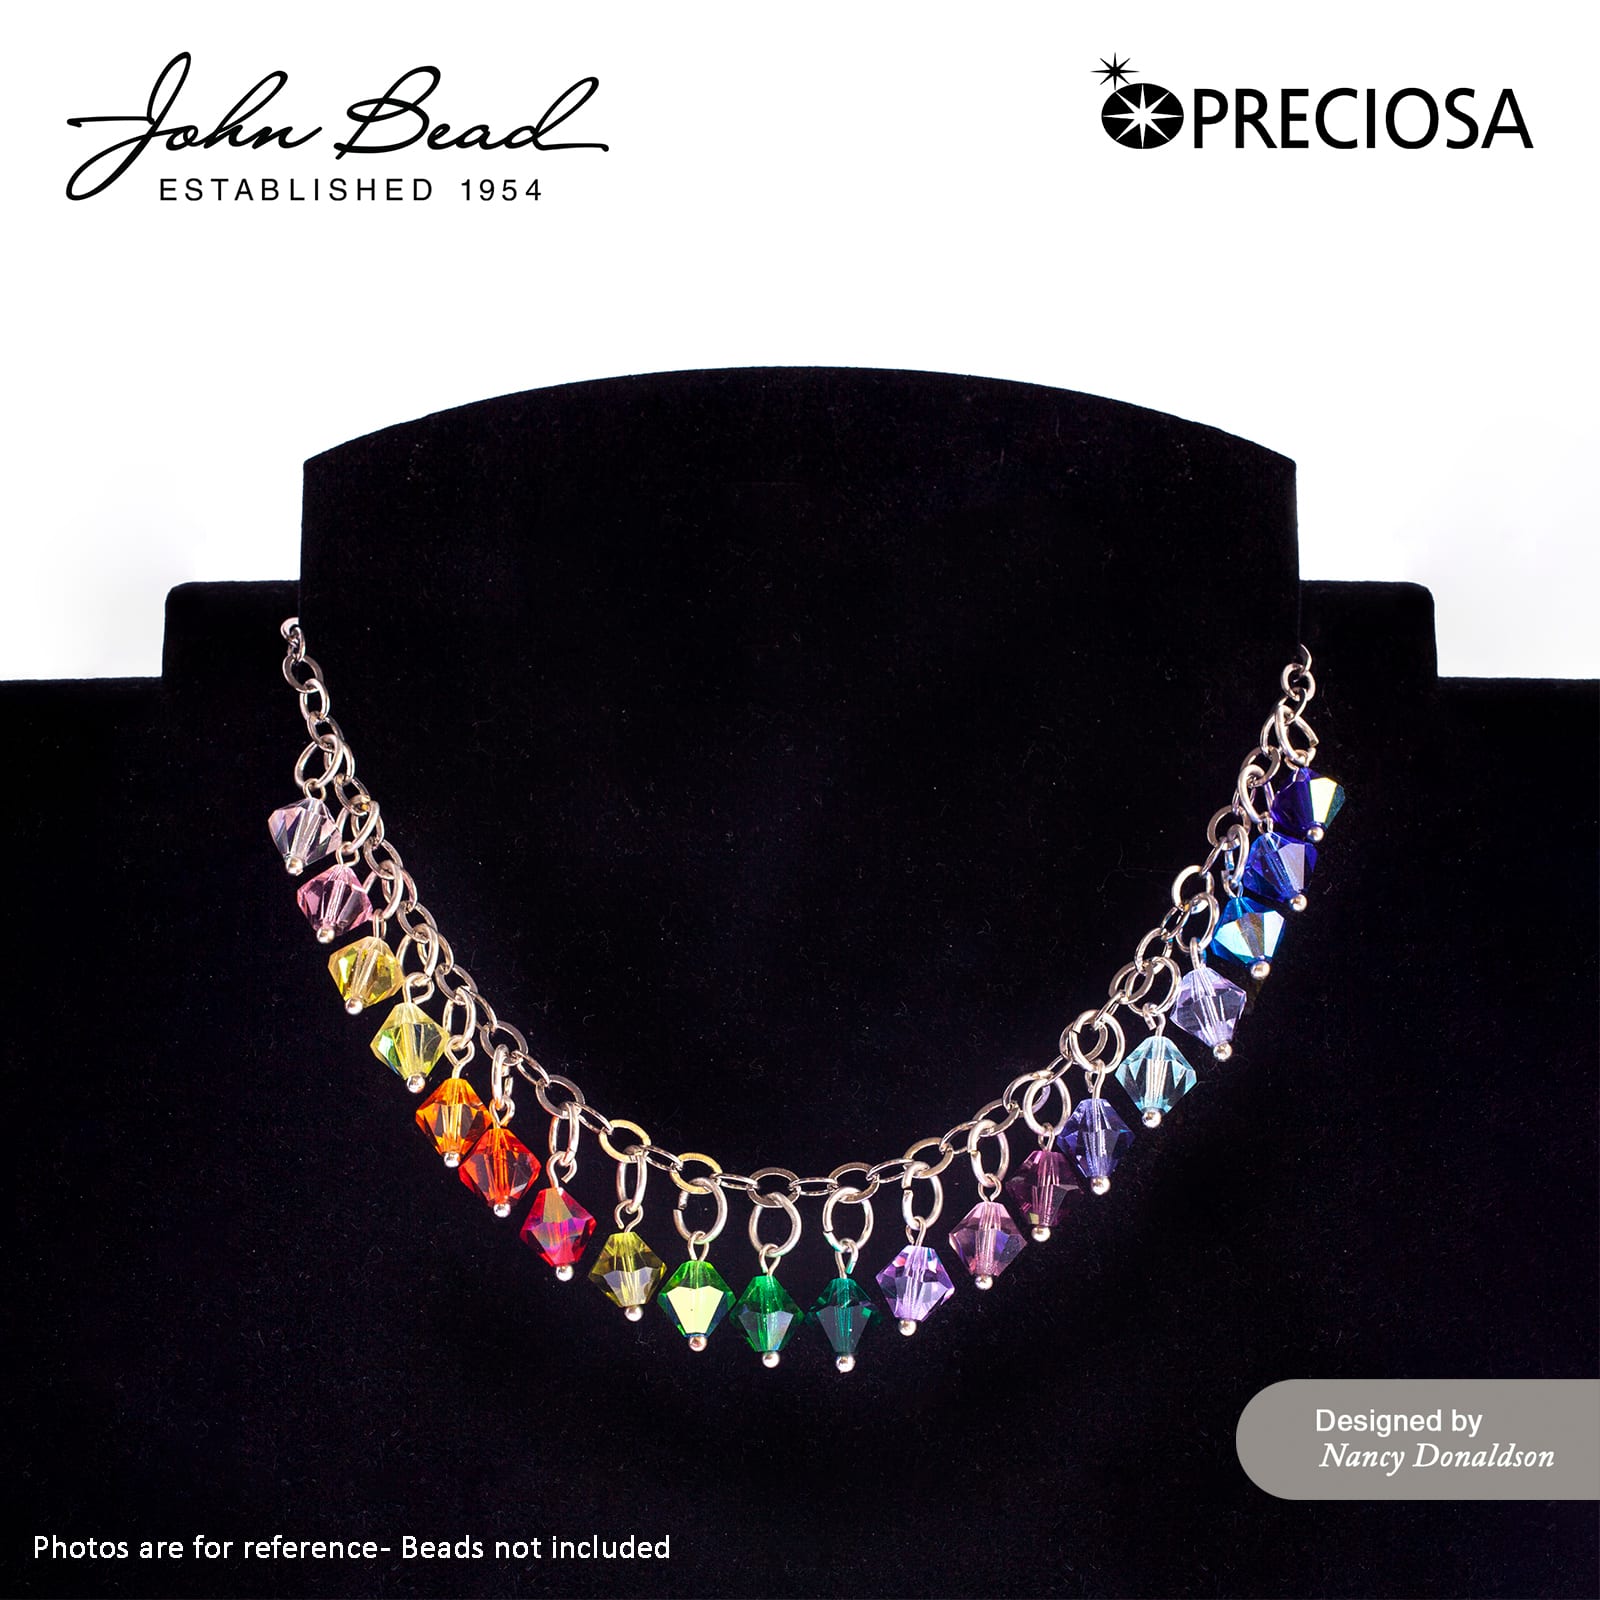 John Bead Preciosa 6mm Czech Crystal Rondelle Beads, 36ct.